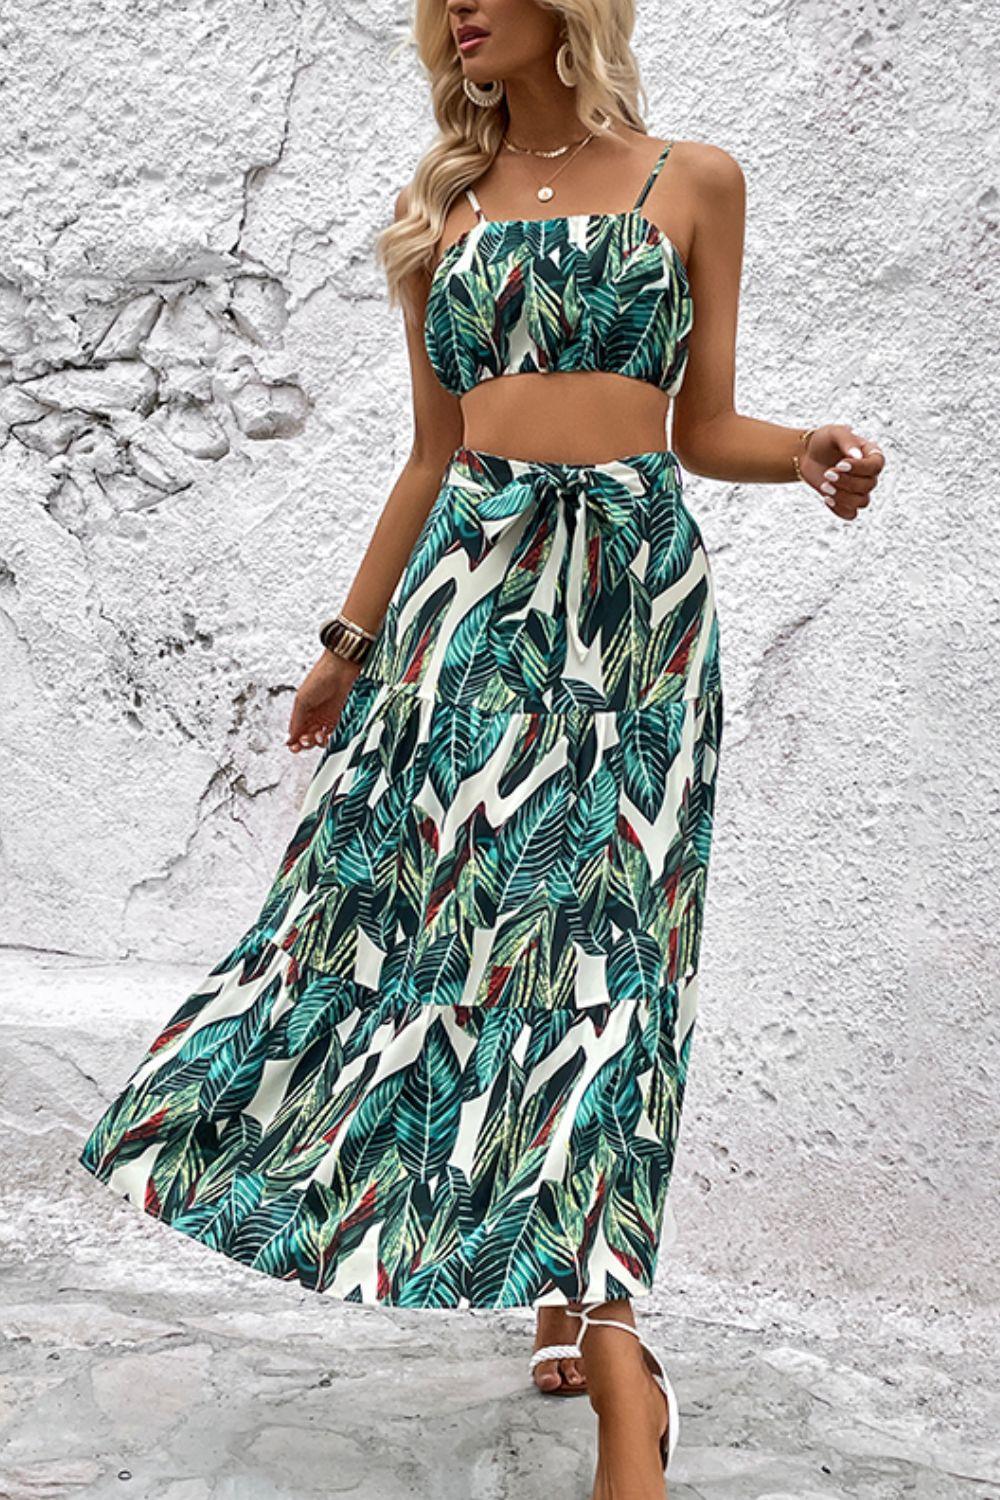 a woman in a tropical print dress